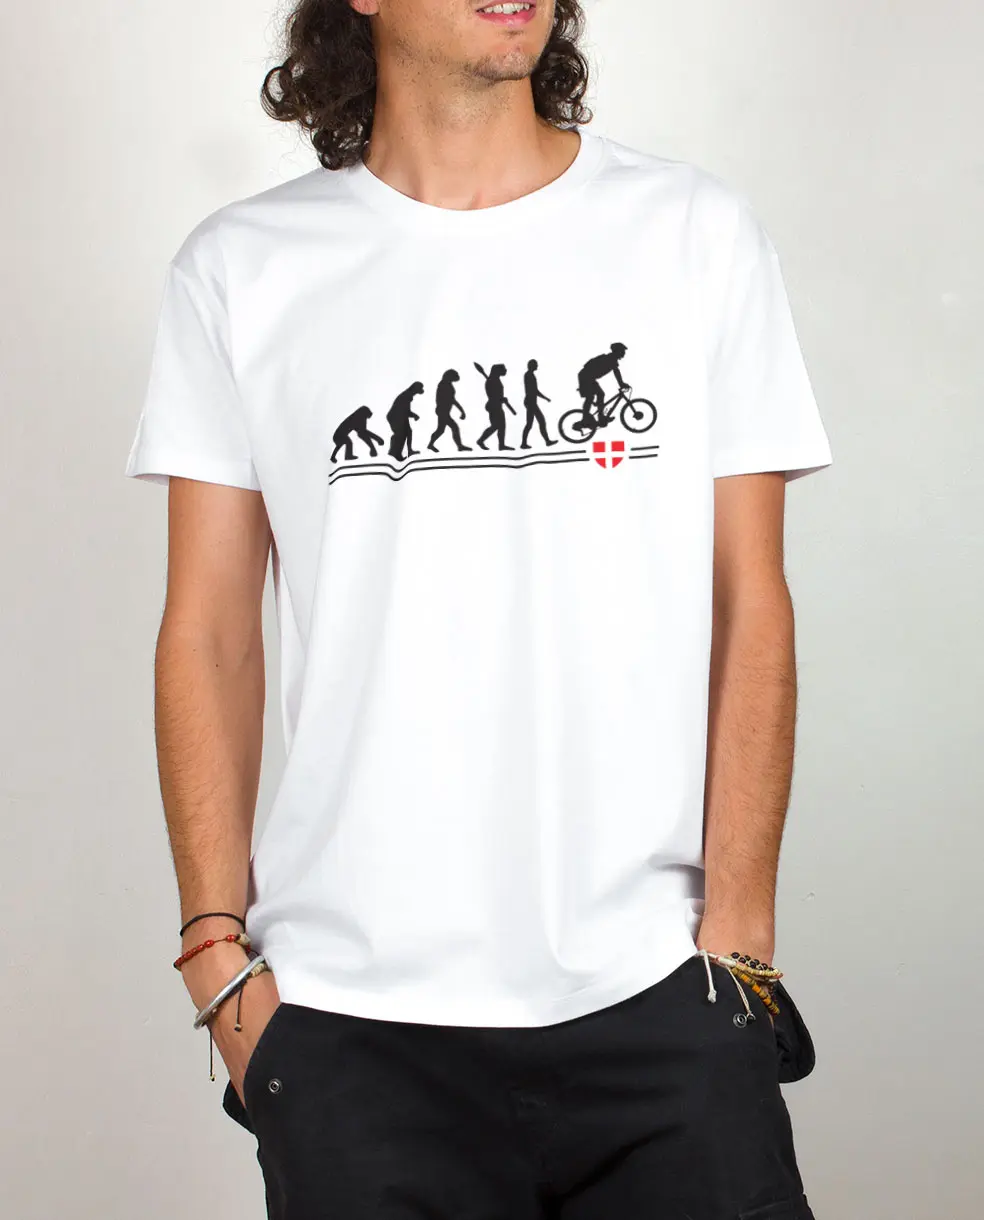 Aanstellen Smederij Stamboom T-shirt Savoie Homme : Évolution de l'homme VTT